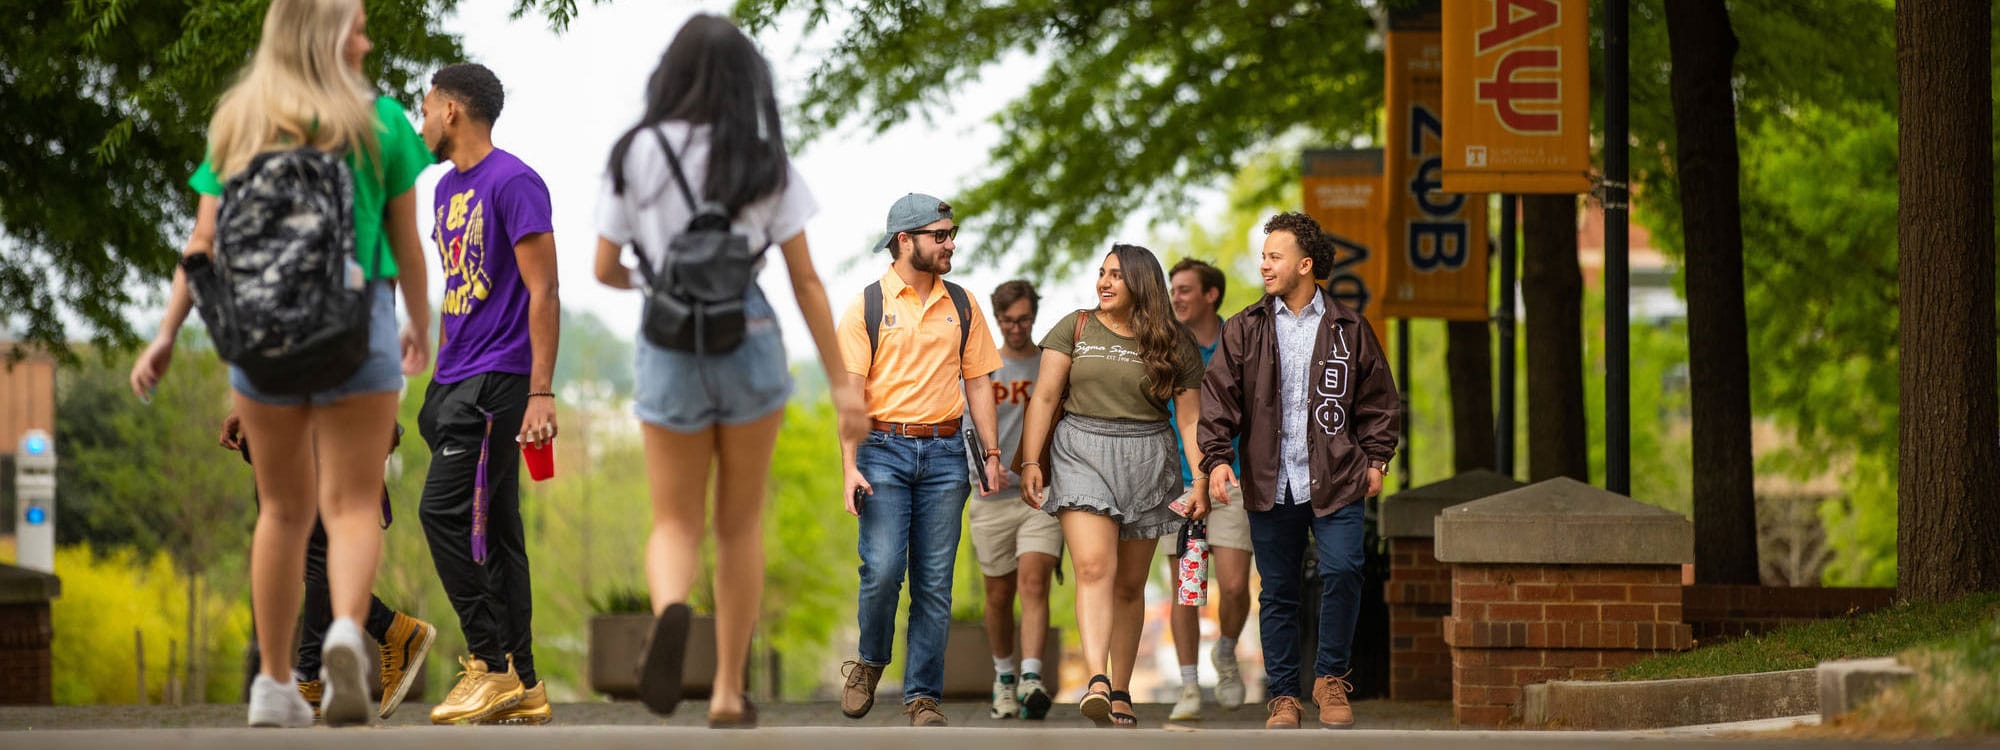 Students walk along Ped walkway